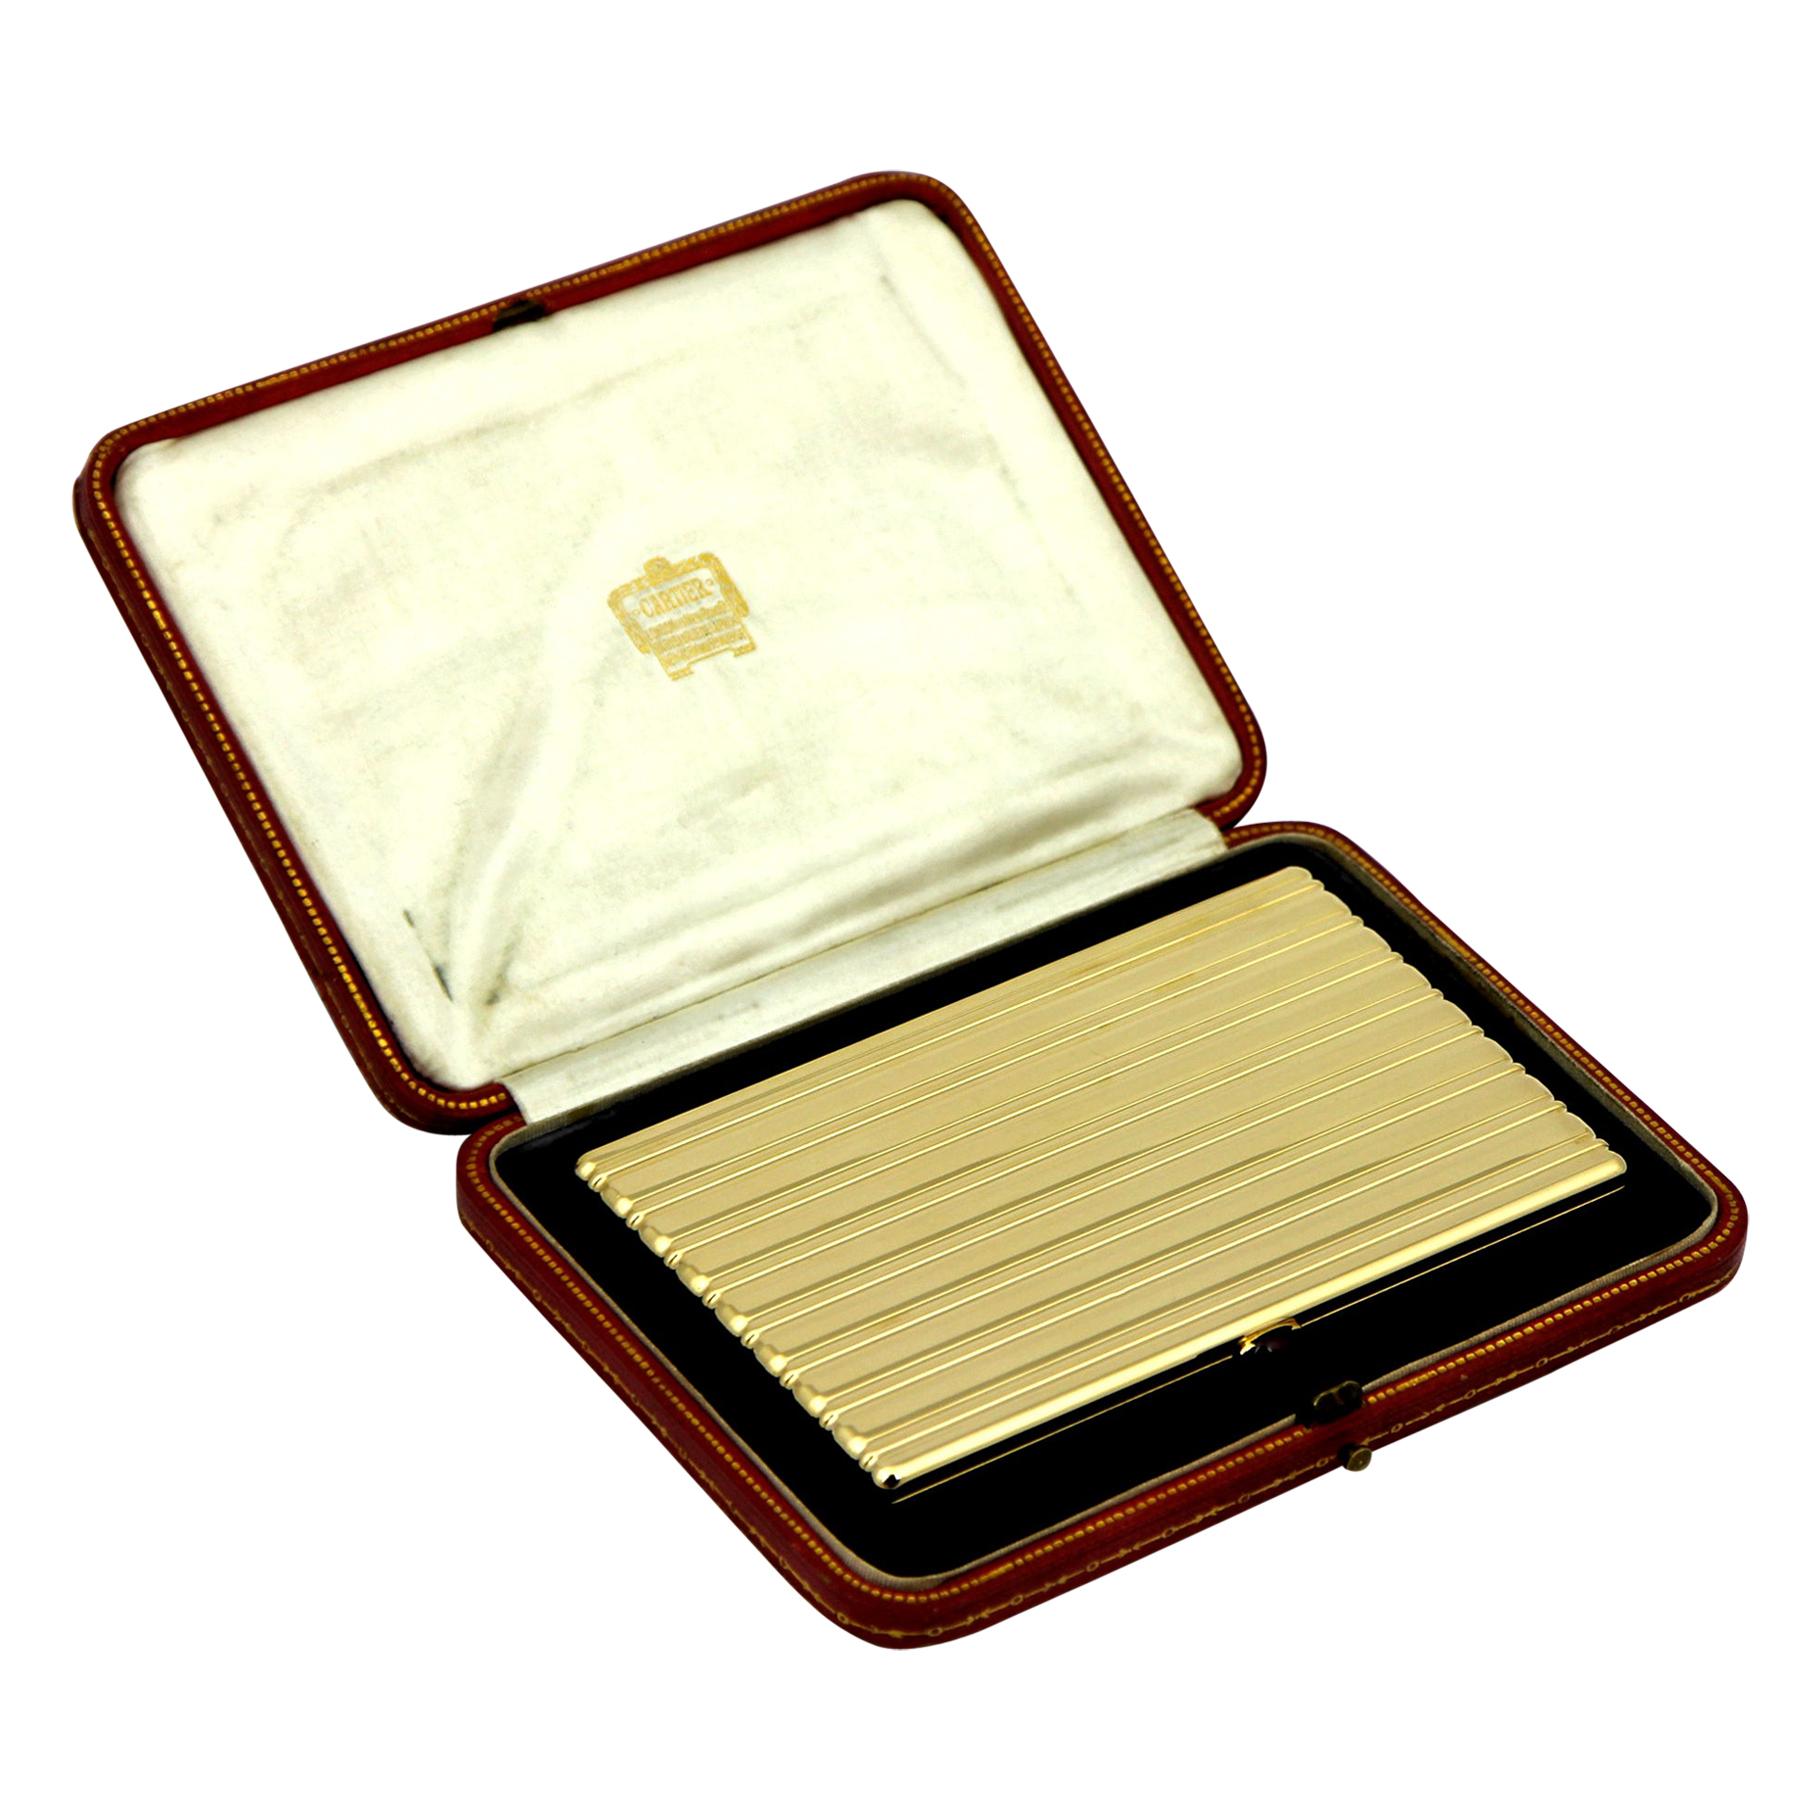 Cartier London 1947 18 Karat Yellow Gold Ruby Clasp Cigarette Case 